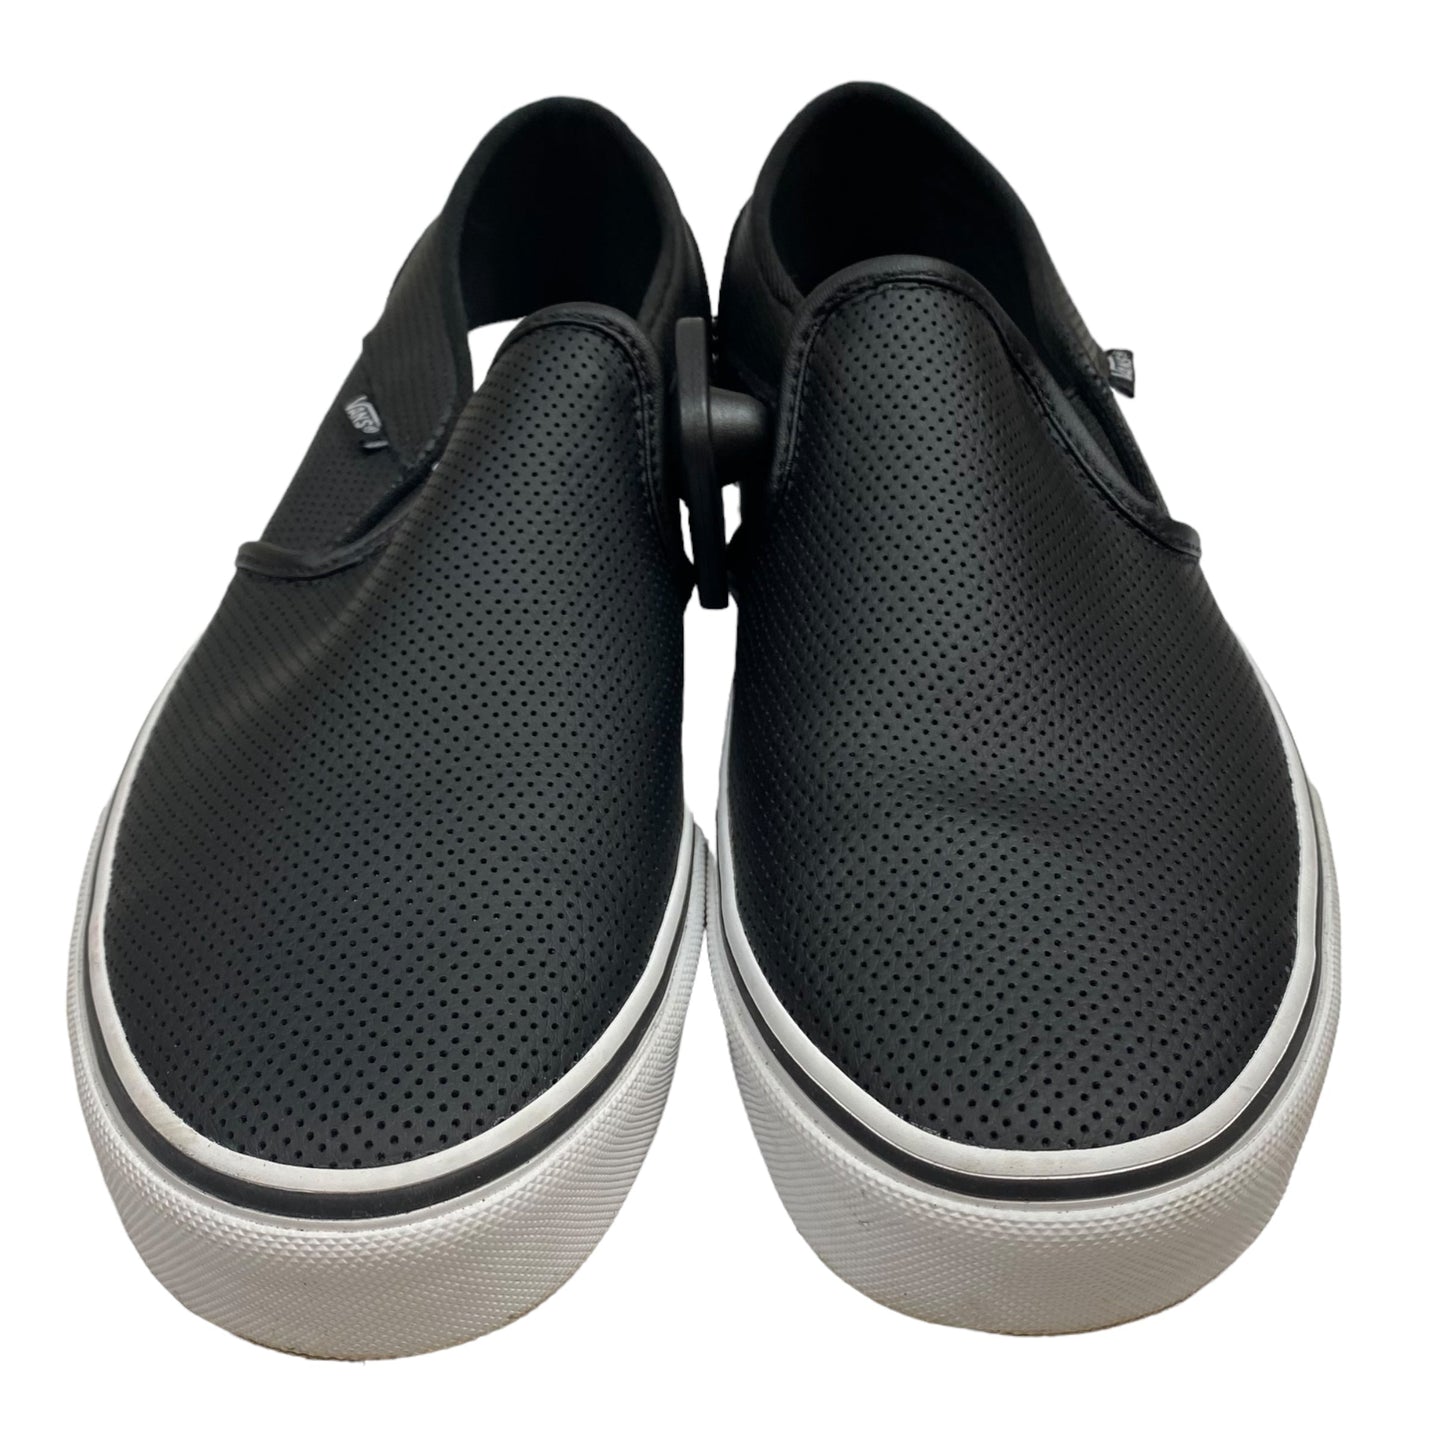 Shoes Flats By Vans  Size: 10